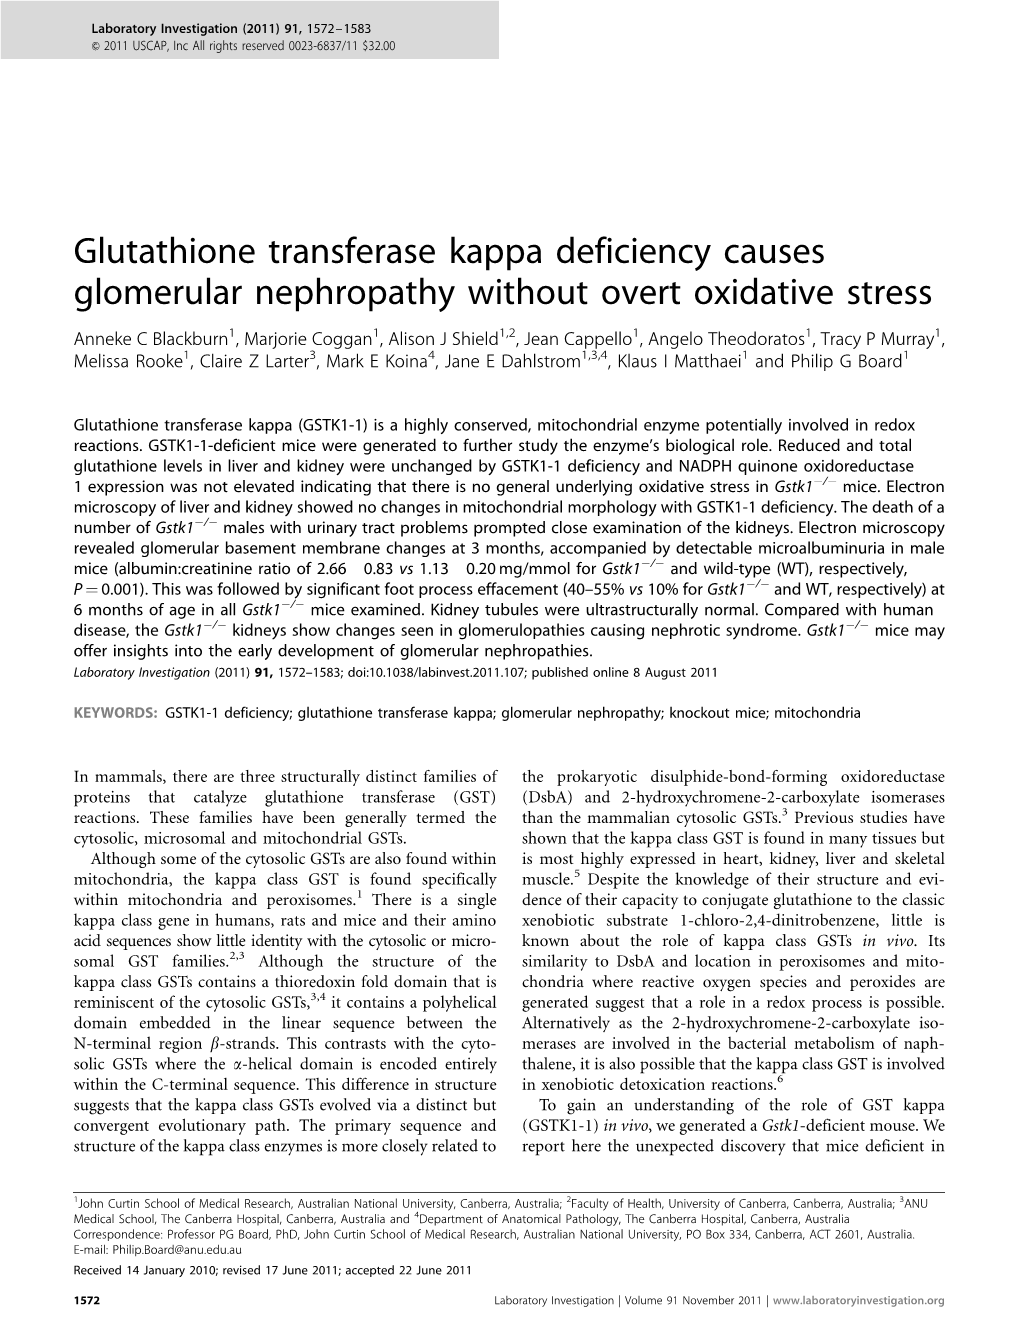 Glutathione Transferase Kappa Deficiency Causes Glomerular